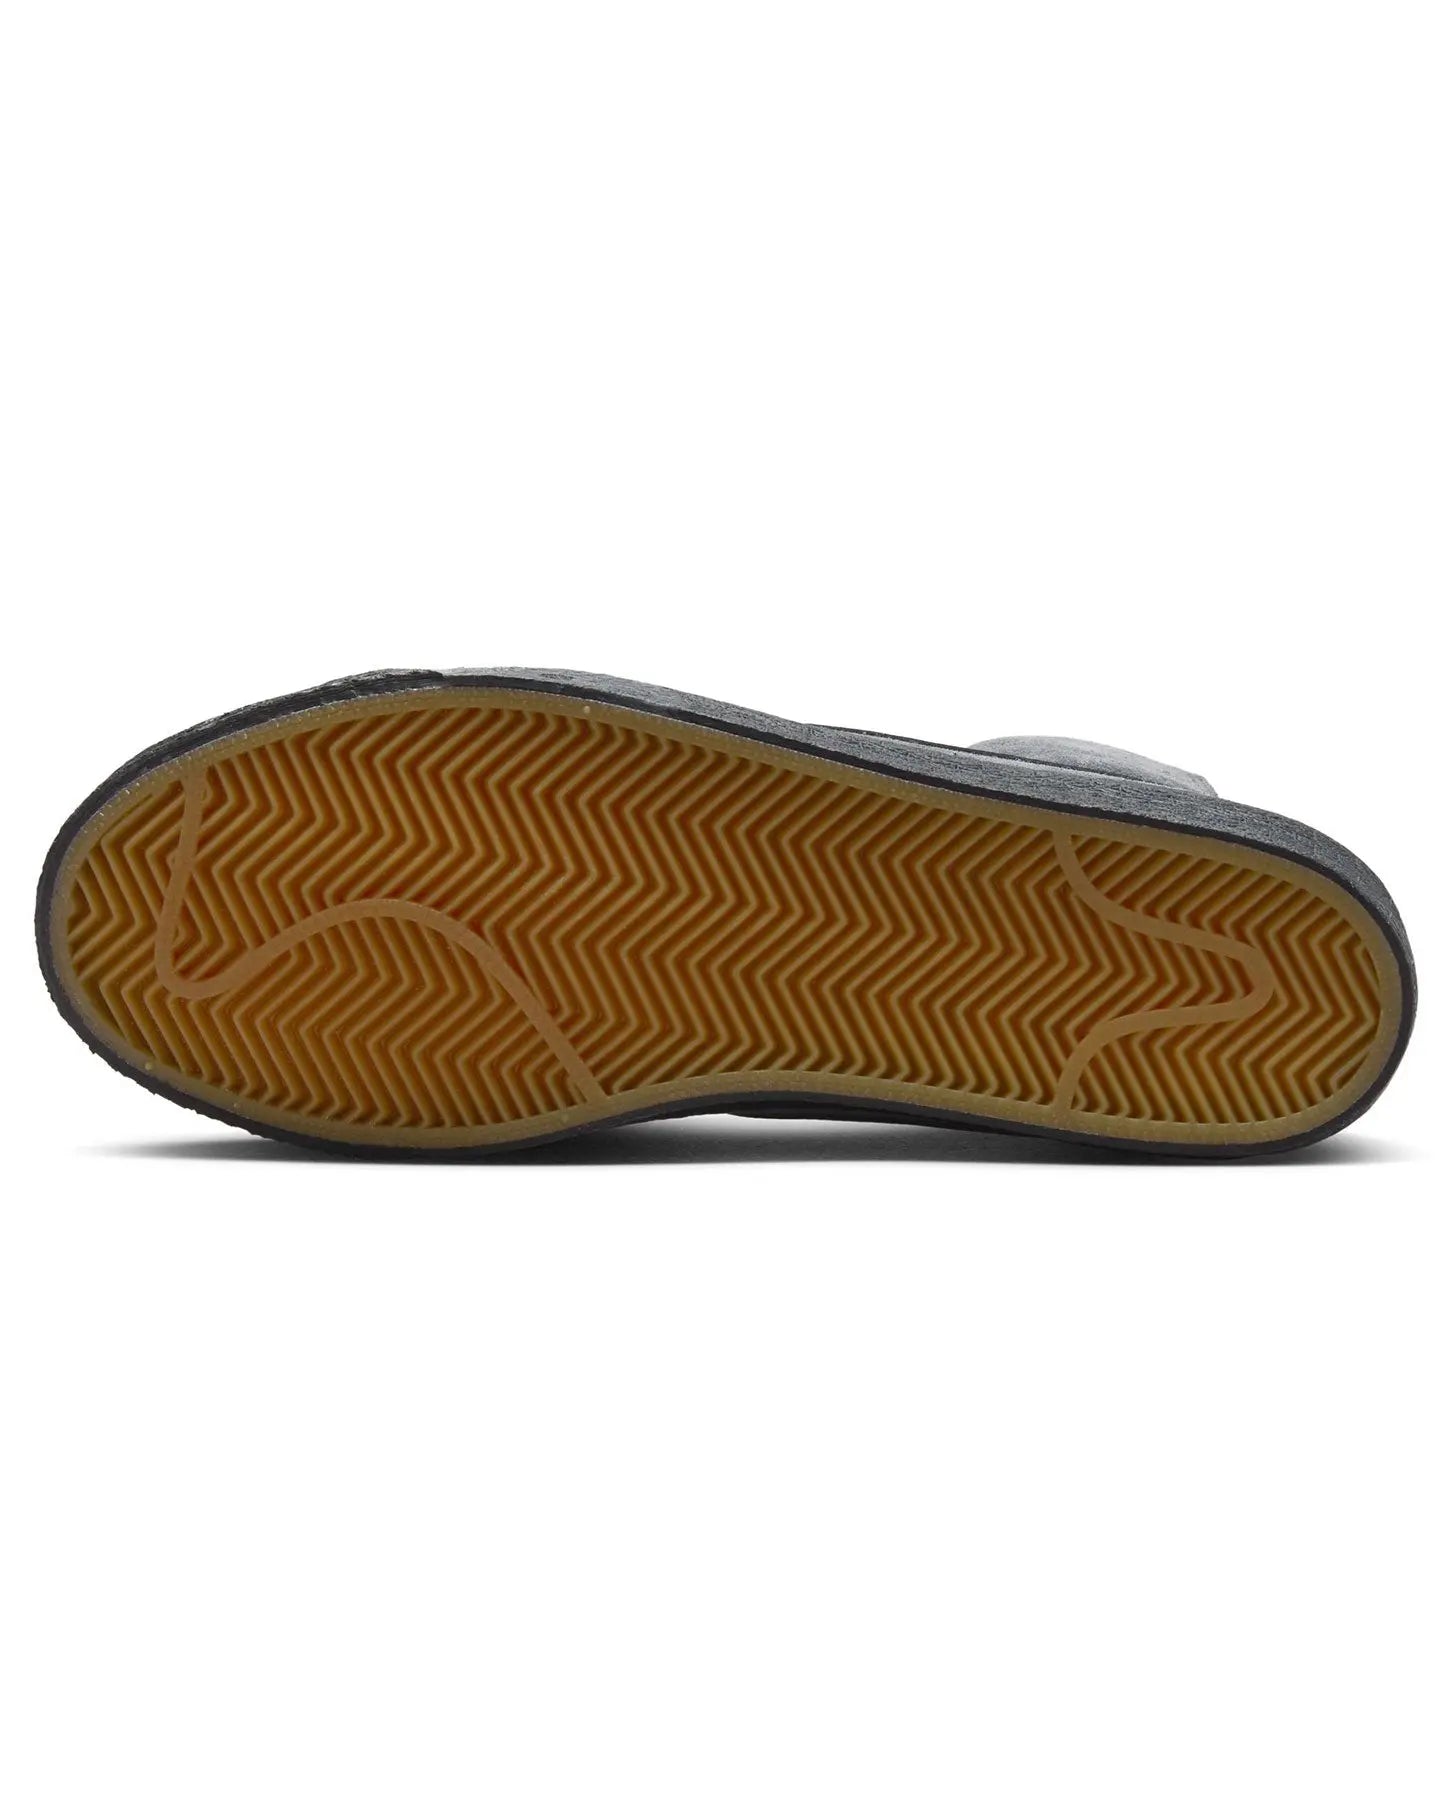 Nike SB Zoom Blazer Mid - Anthracite / Black / Black Footwear